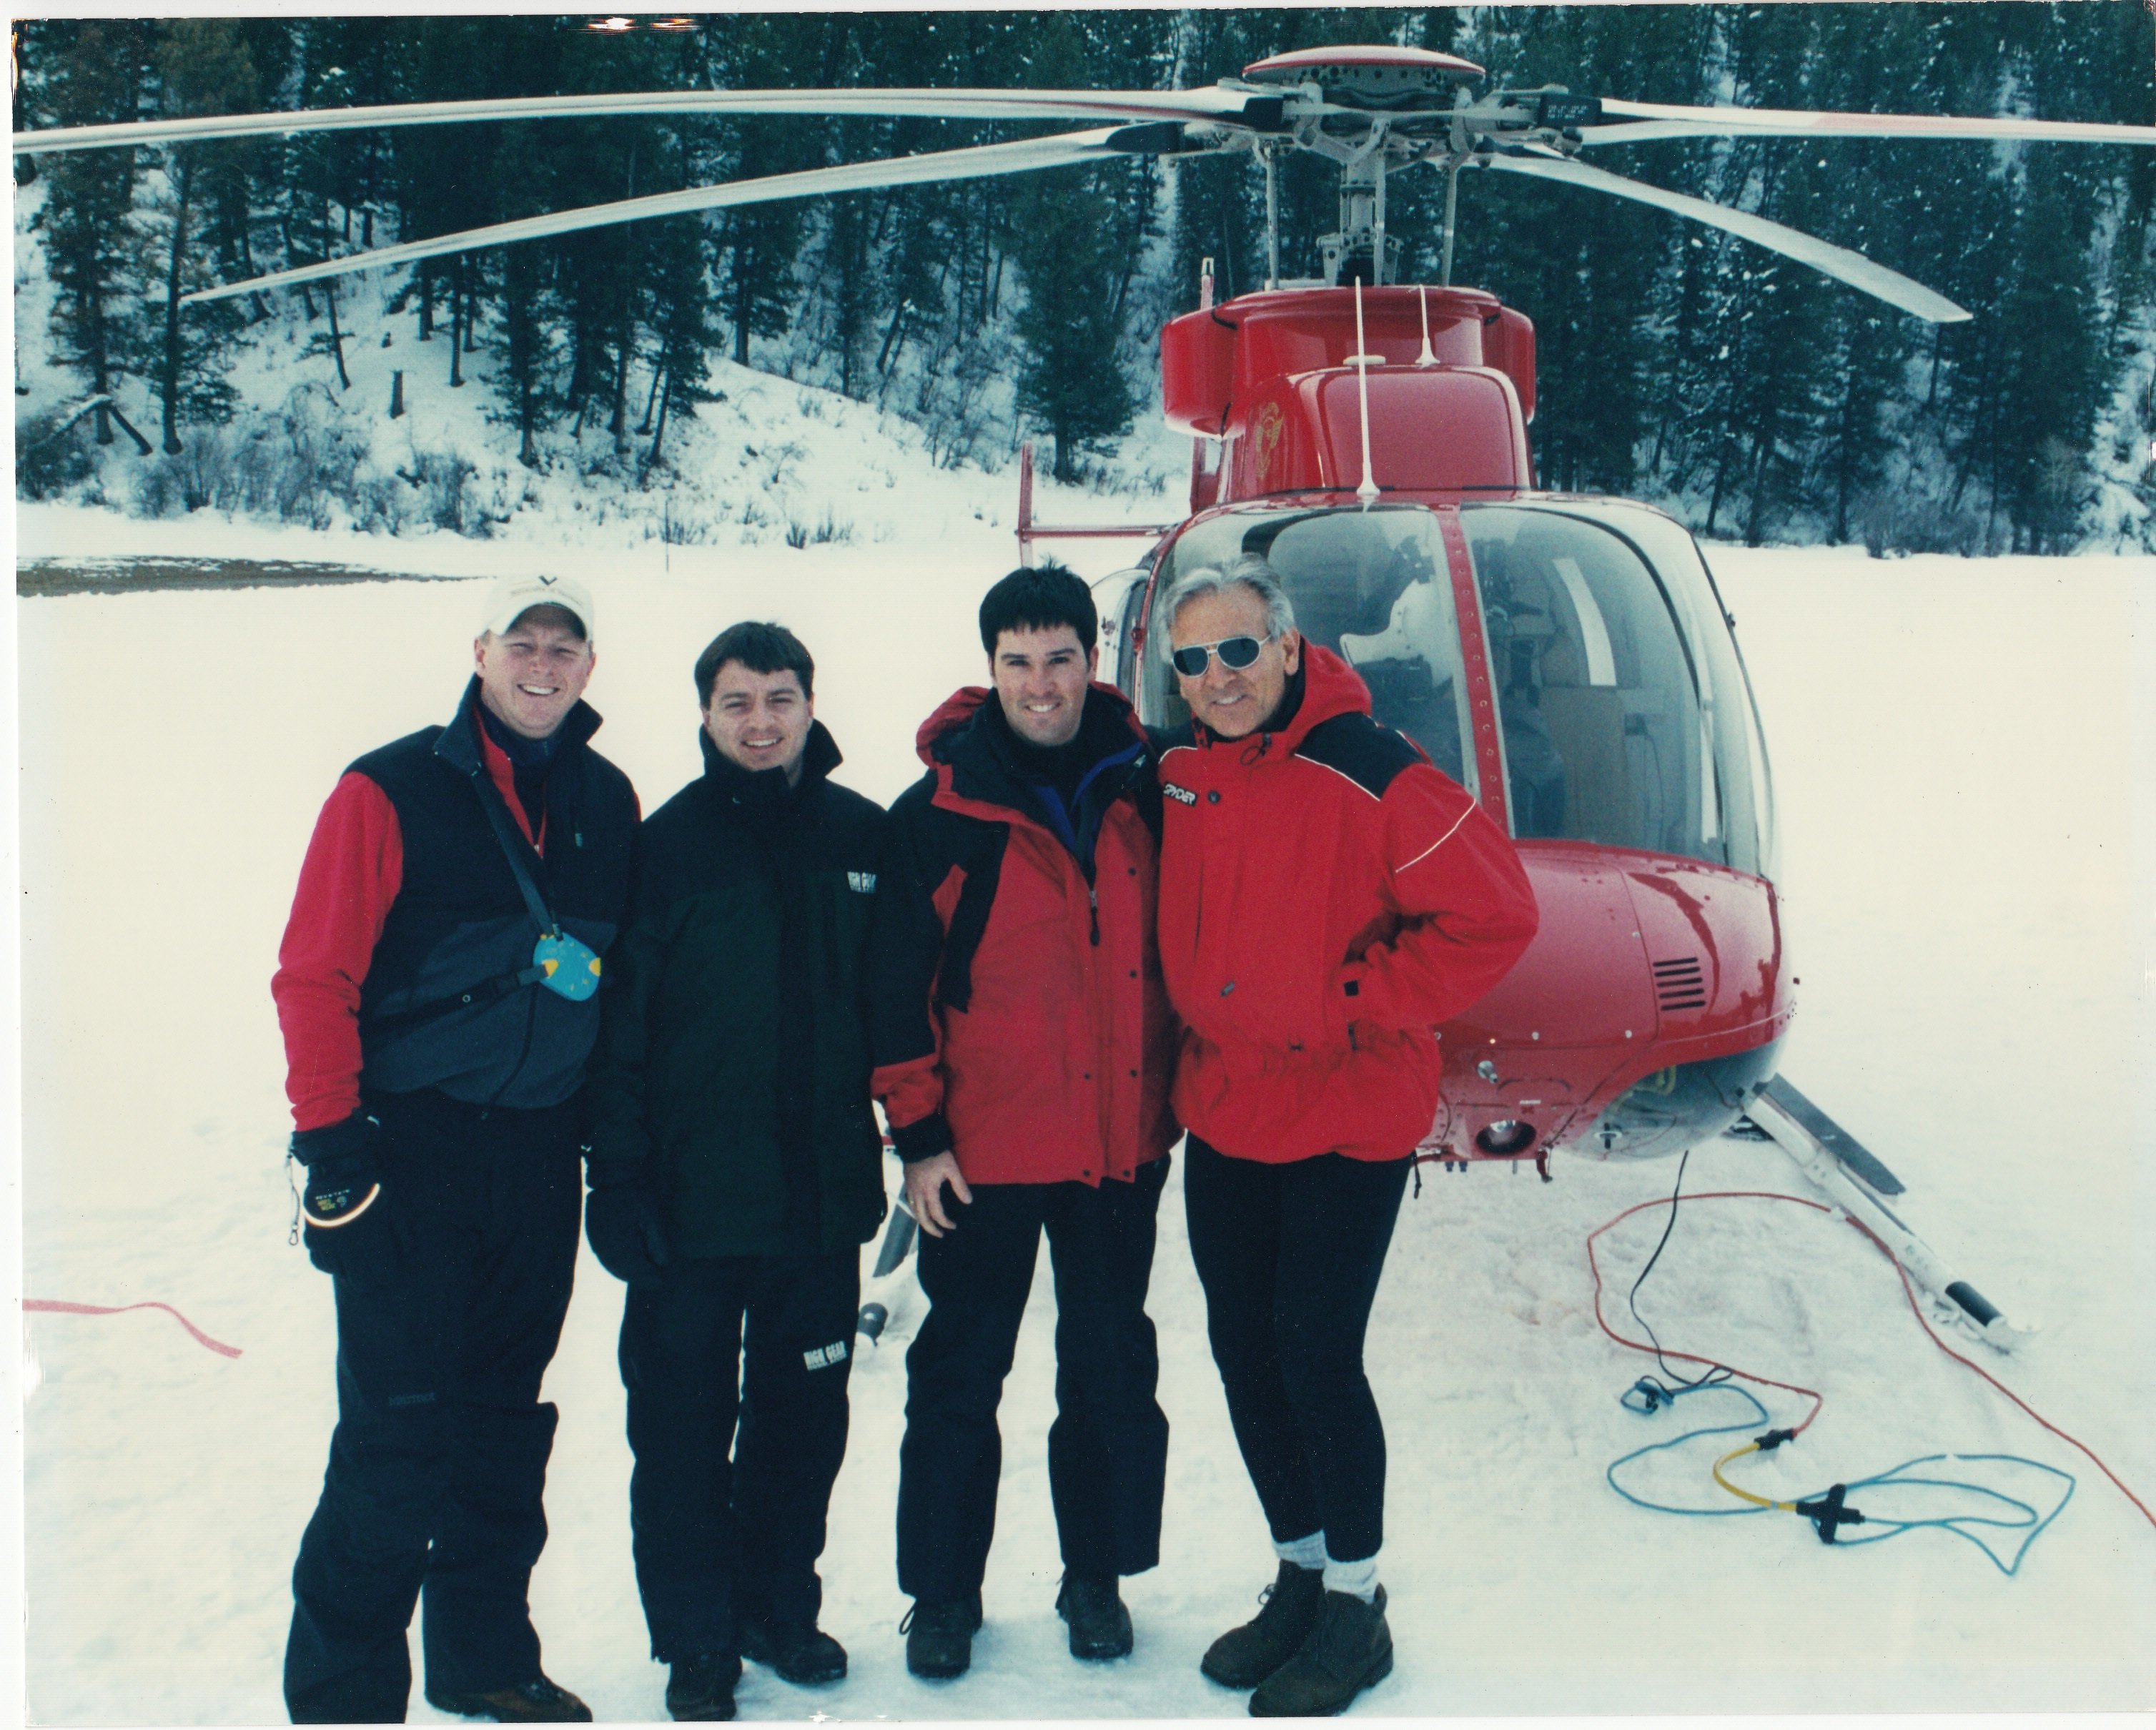 Dan Fantasia and his mentor Tony Natella heli skiing